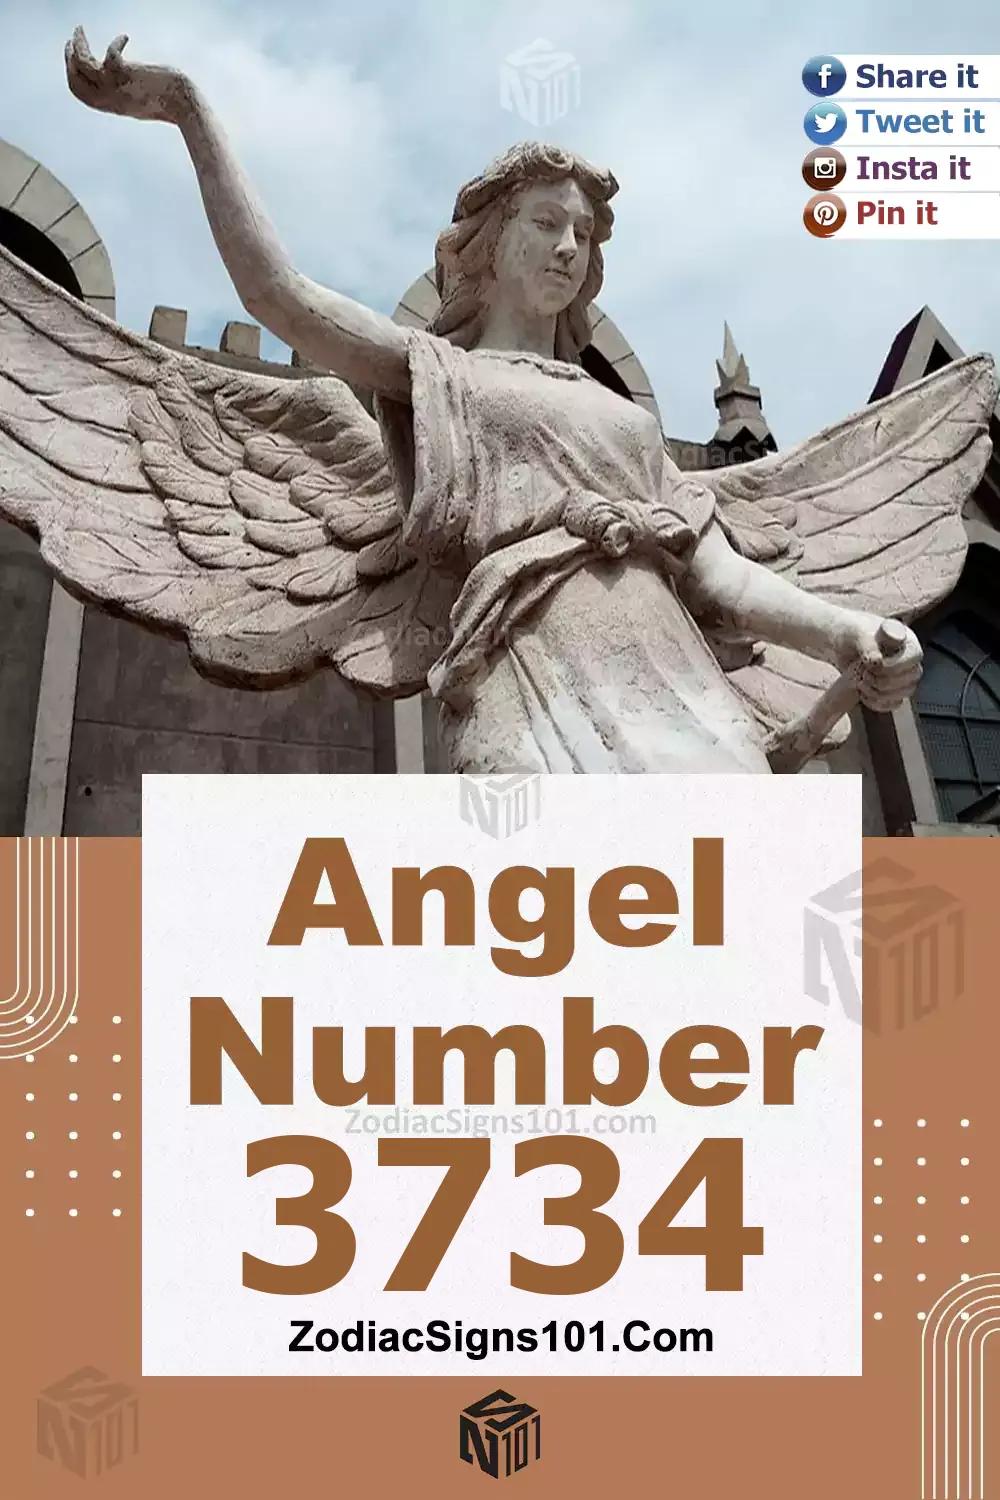 3734-Angel-Number-Meaning.jpg